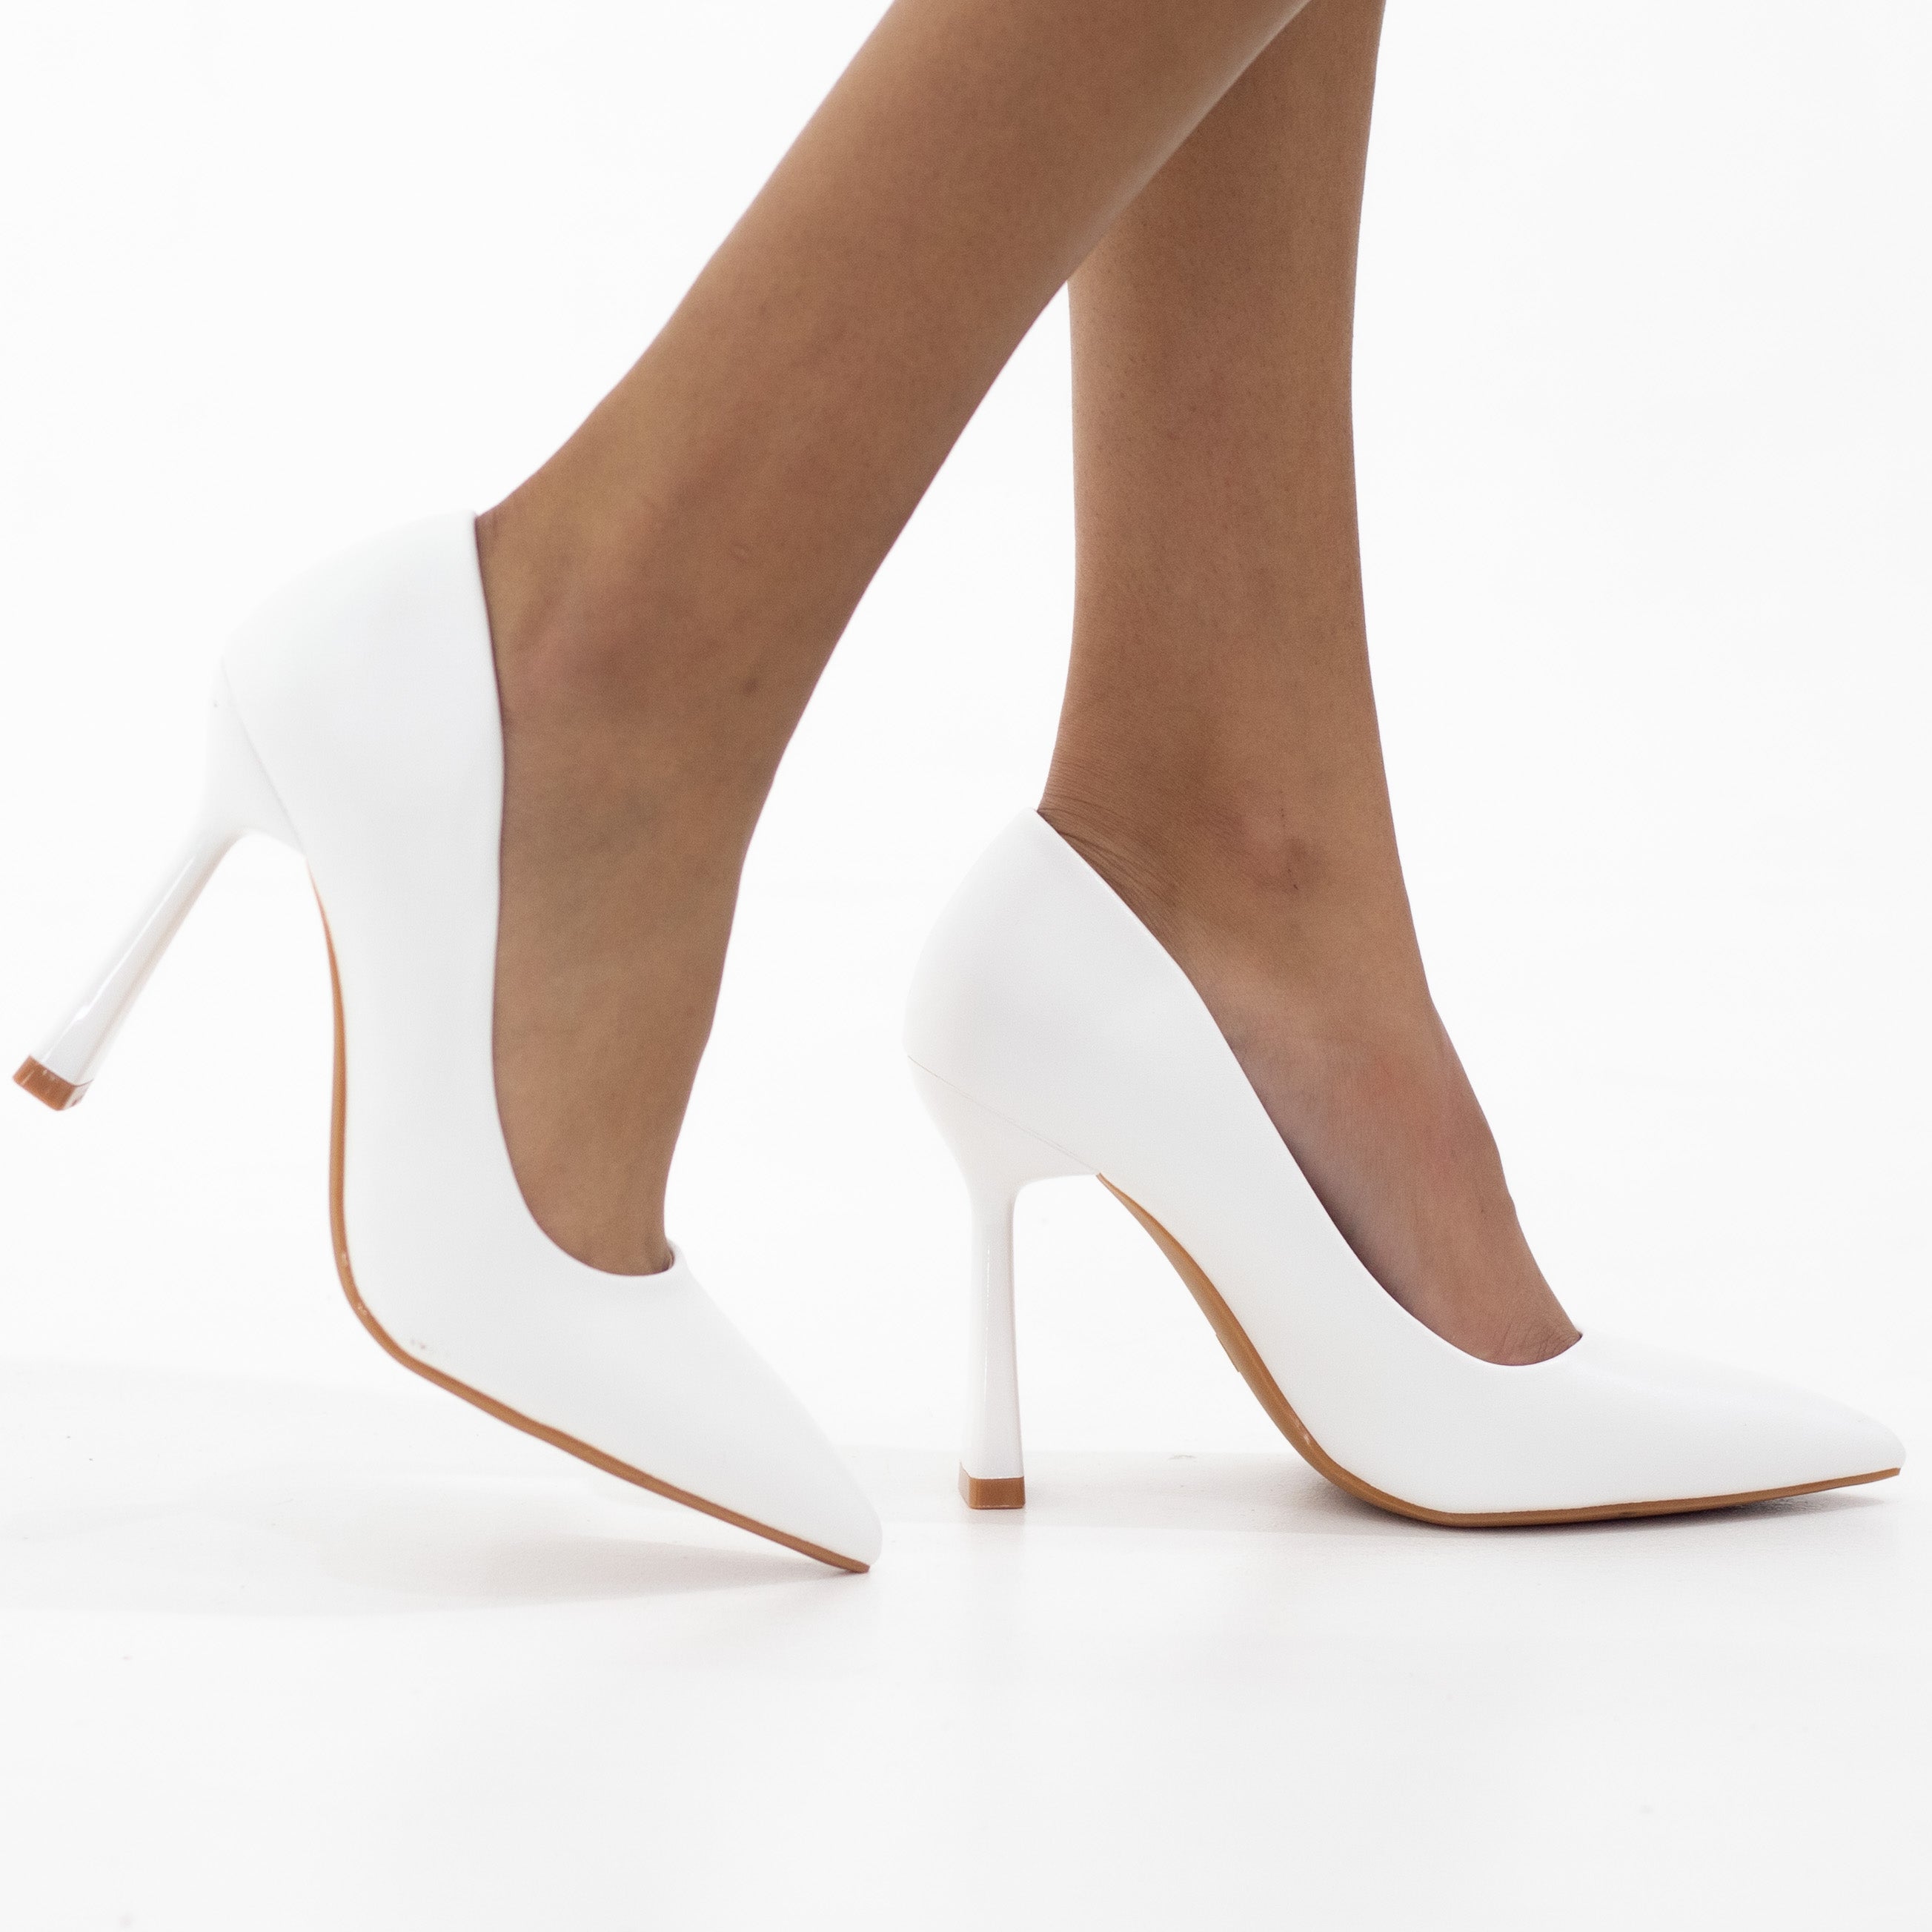 June 10cm sleek stiletto heel court shoes white